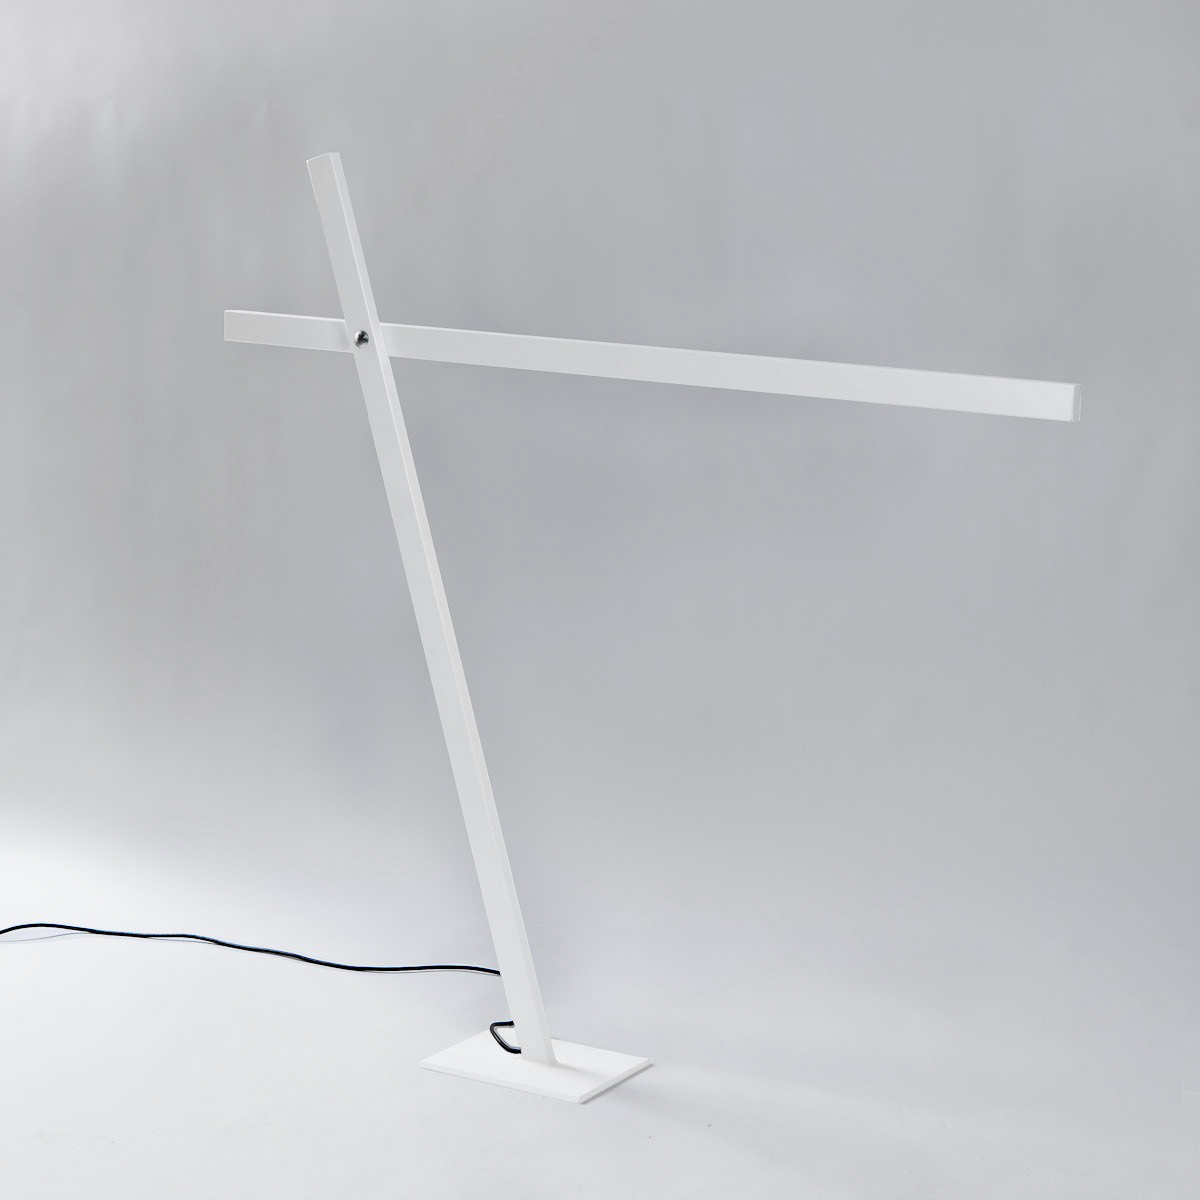 Cantilevered Floor Lamp standing lamp furniture design Interior industrial modern minimal